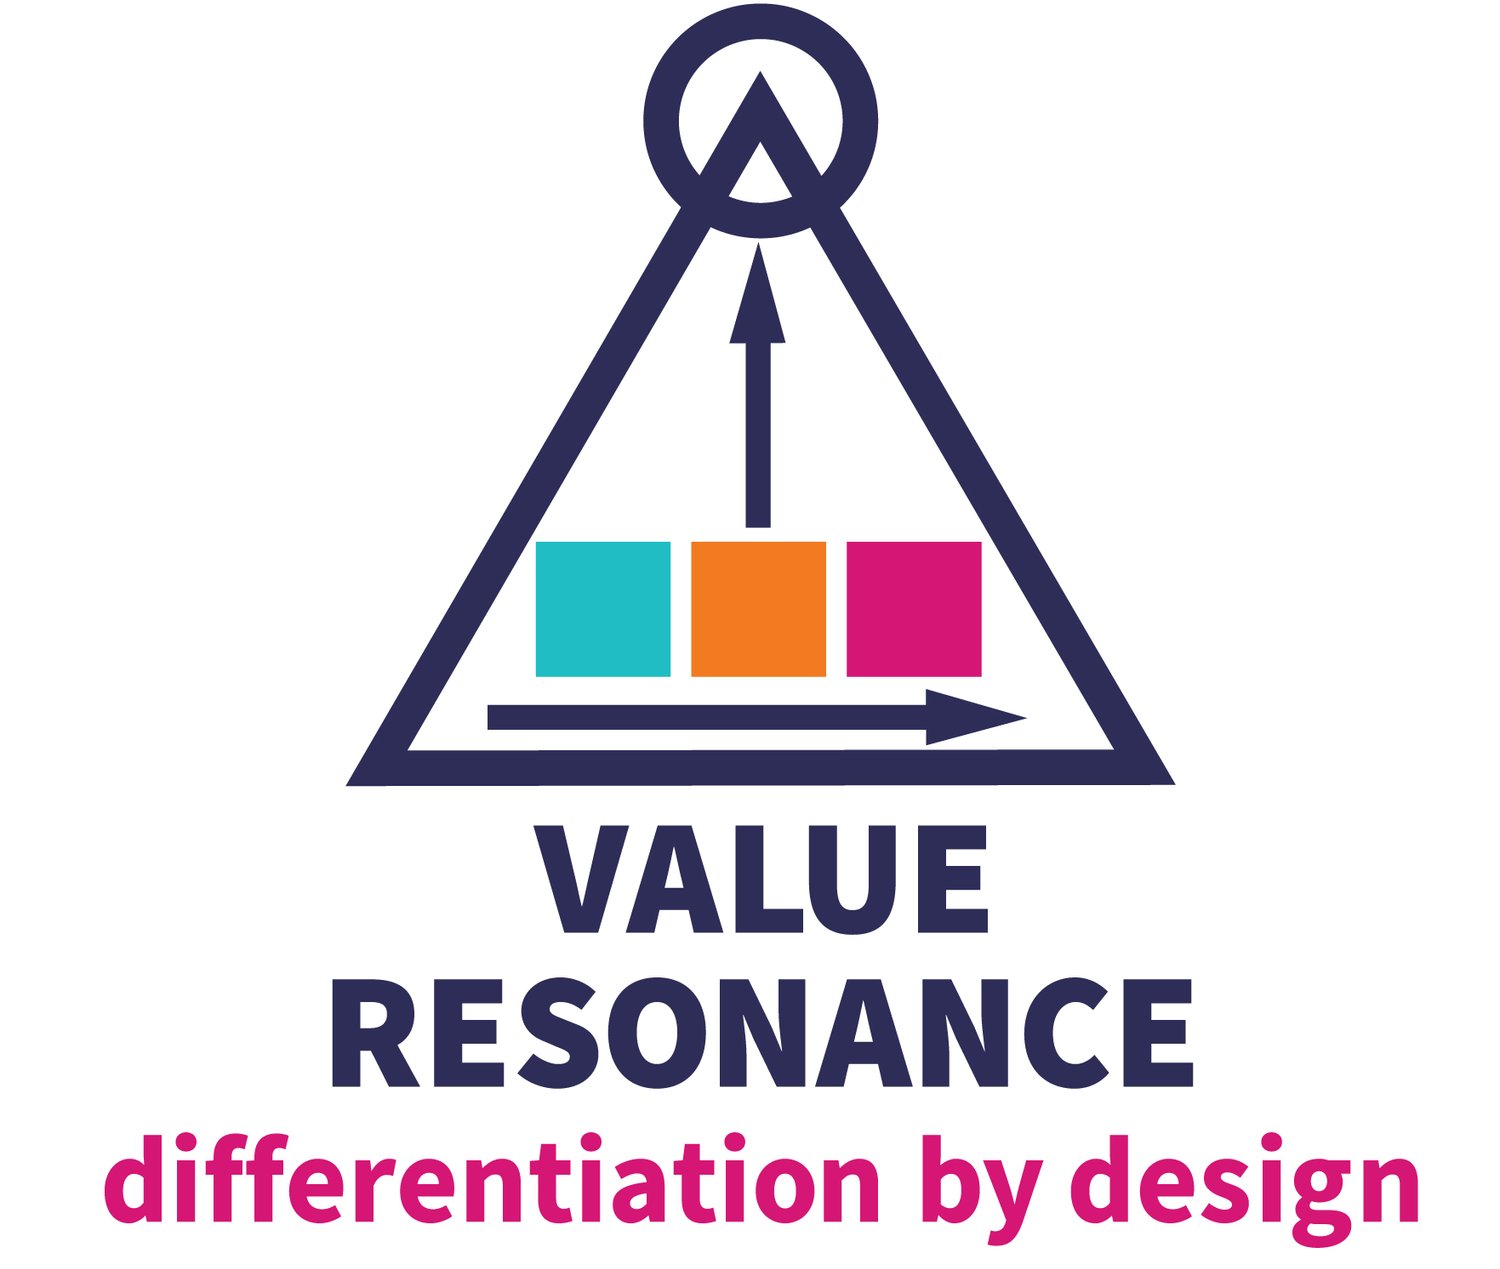 VALUE RESONANCE differentiation by design 